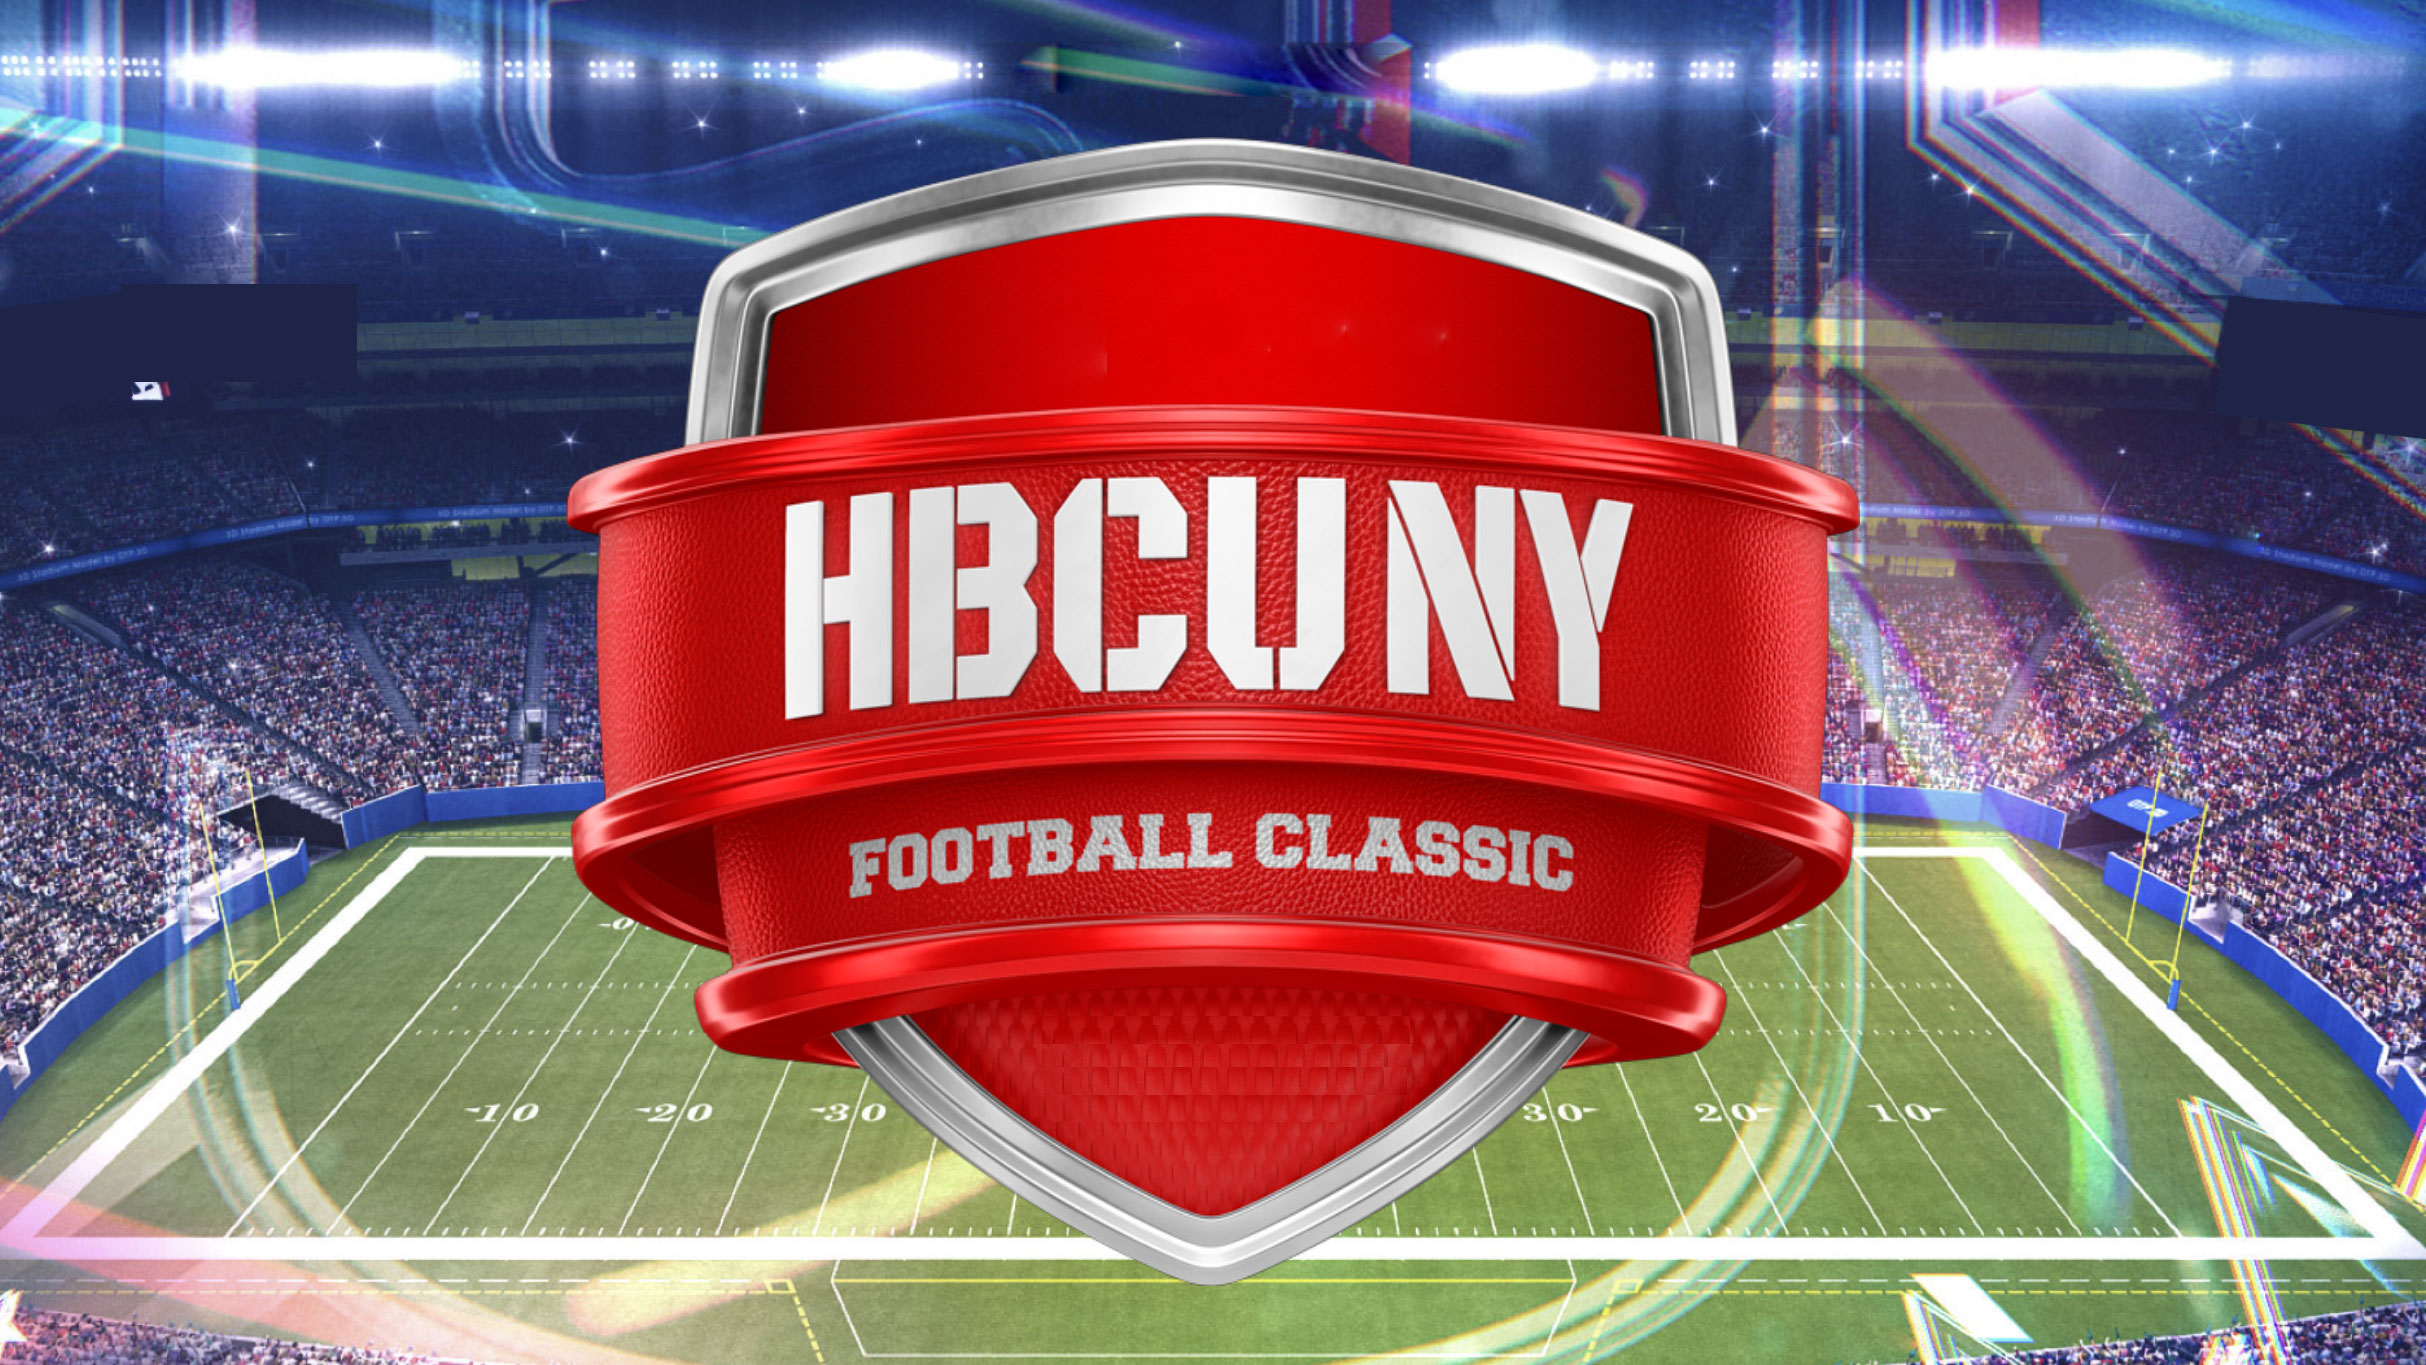 HBCU New York Football Classic